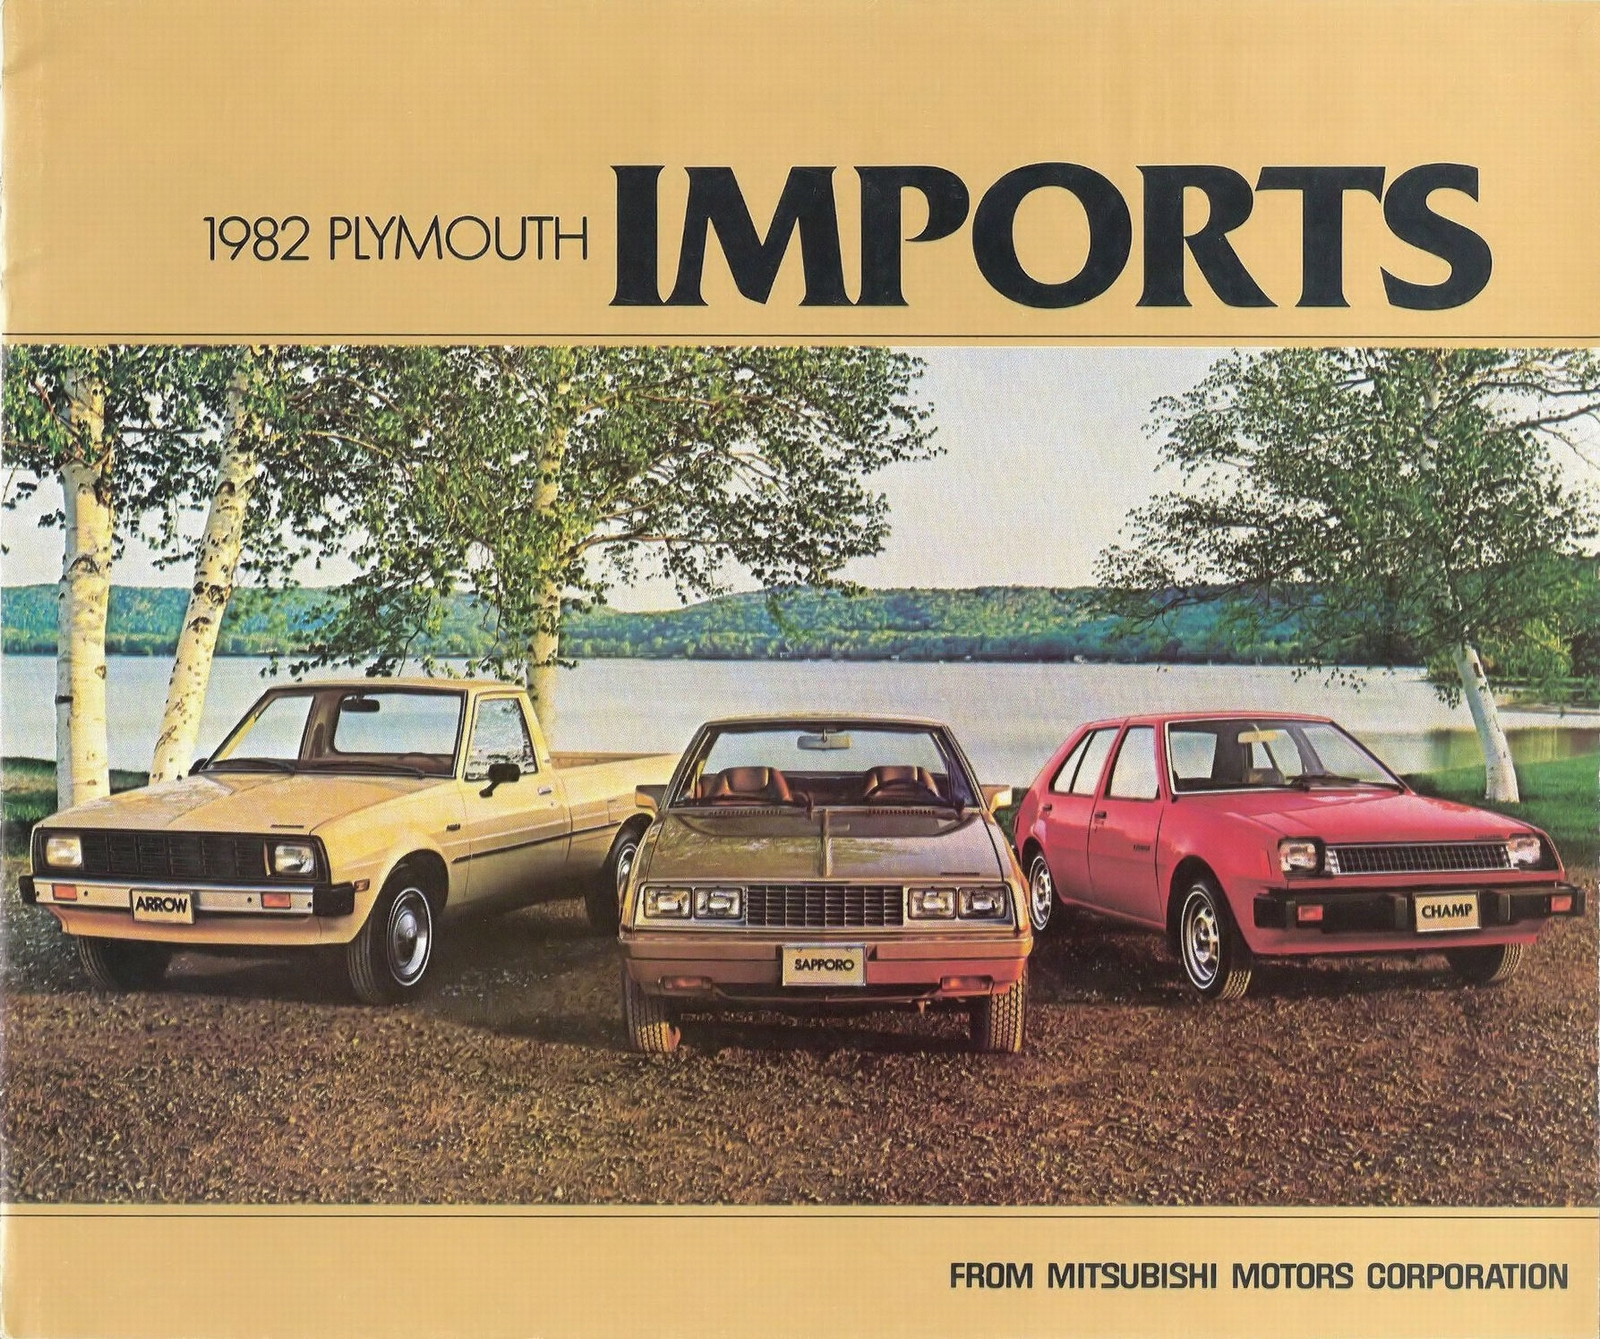 n_1982 Plymouth Imports-01.jpg